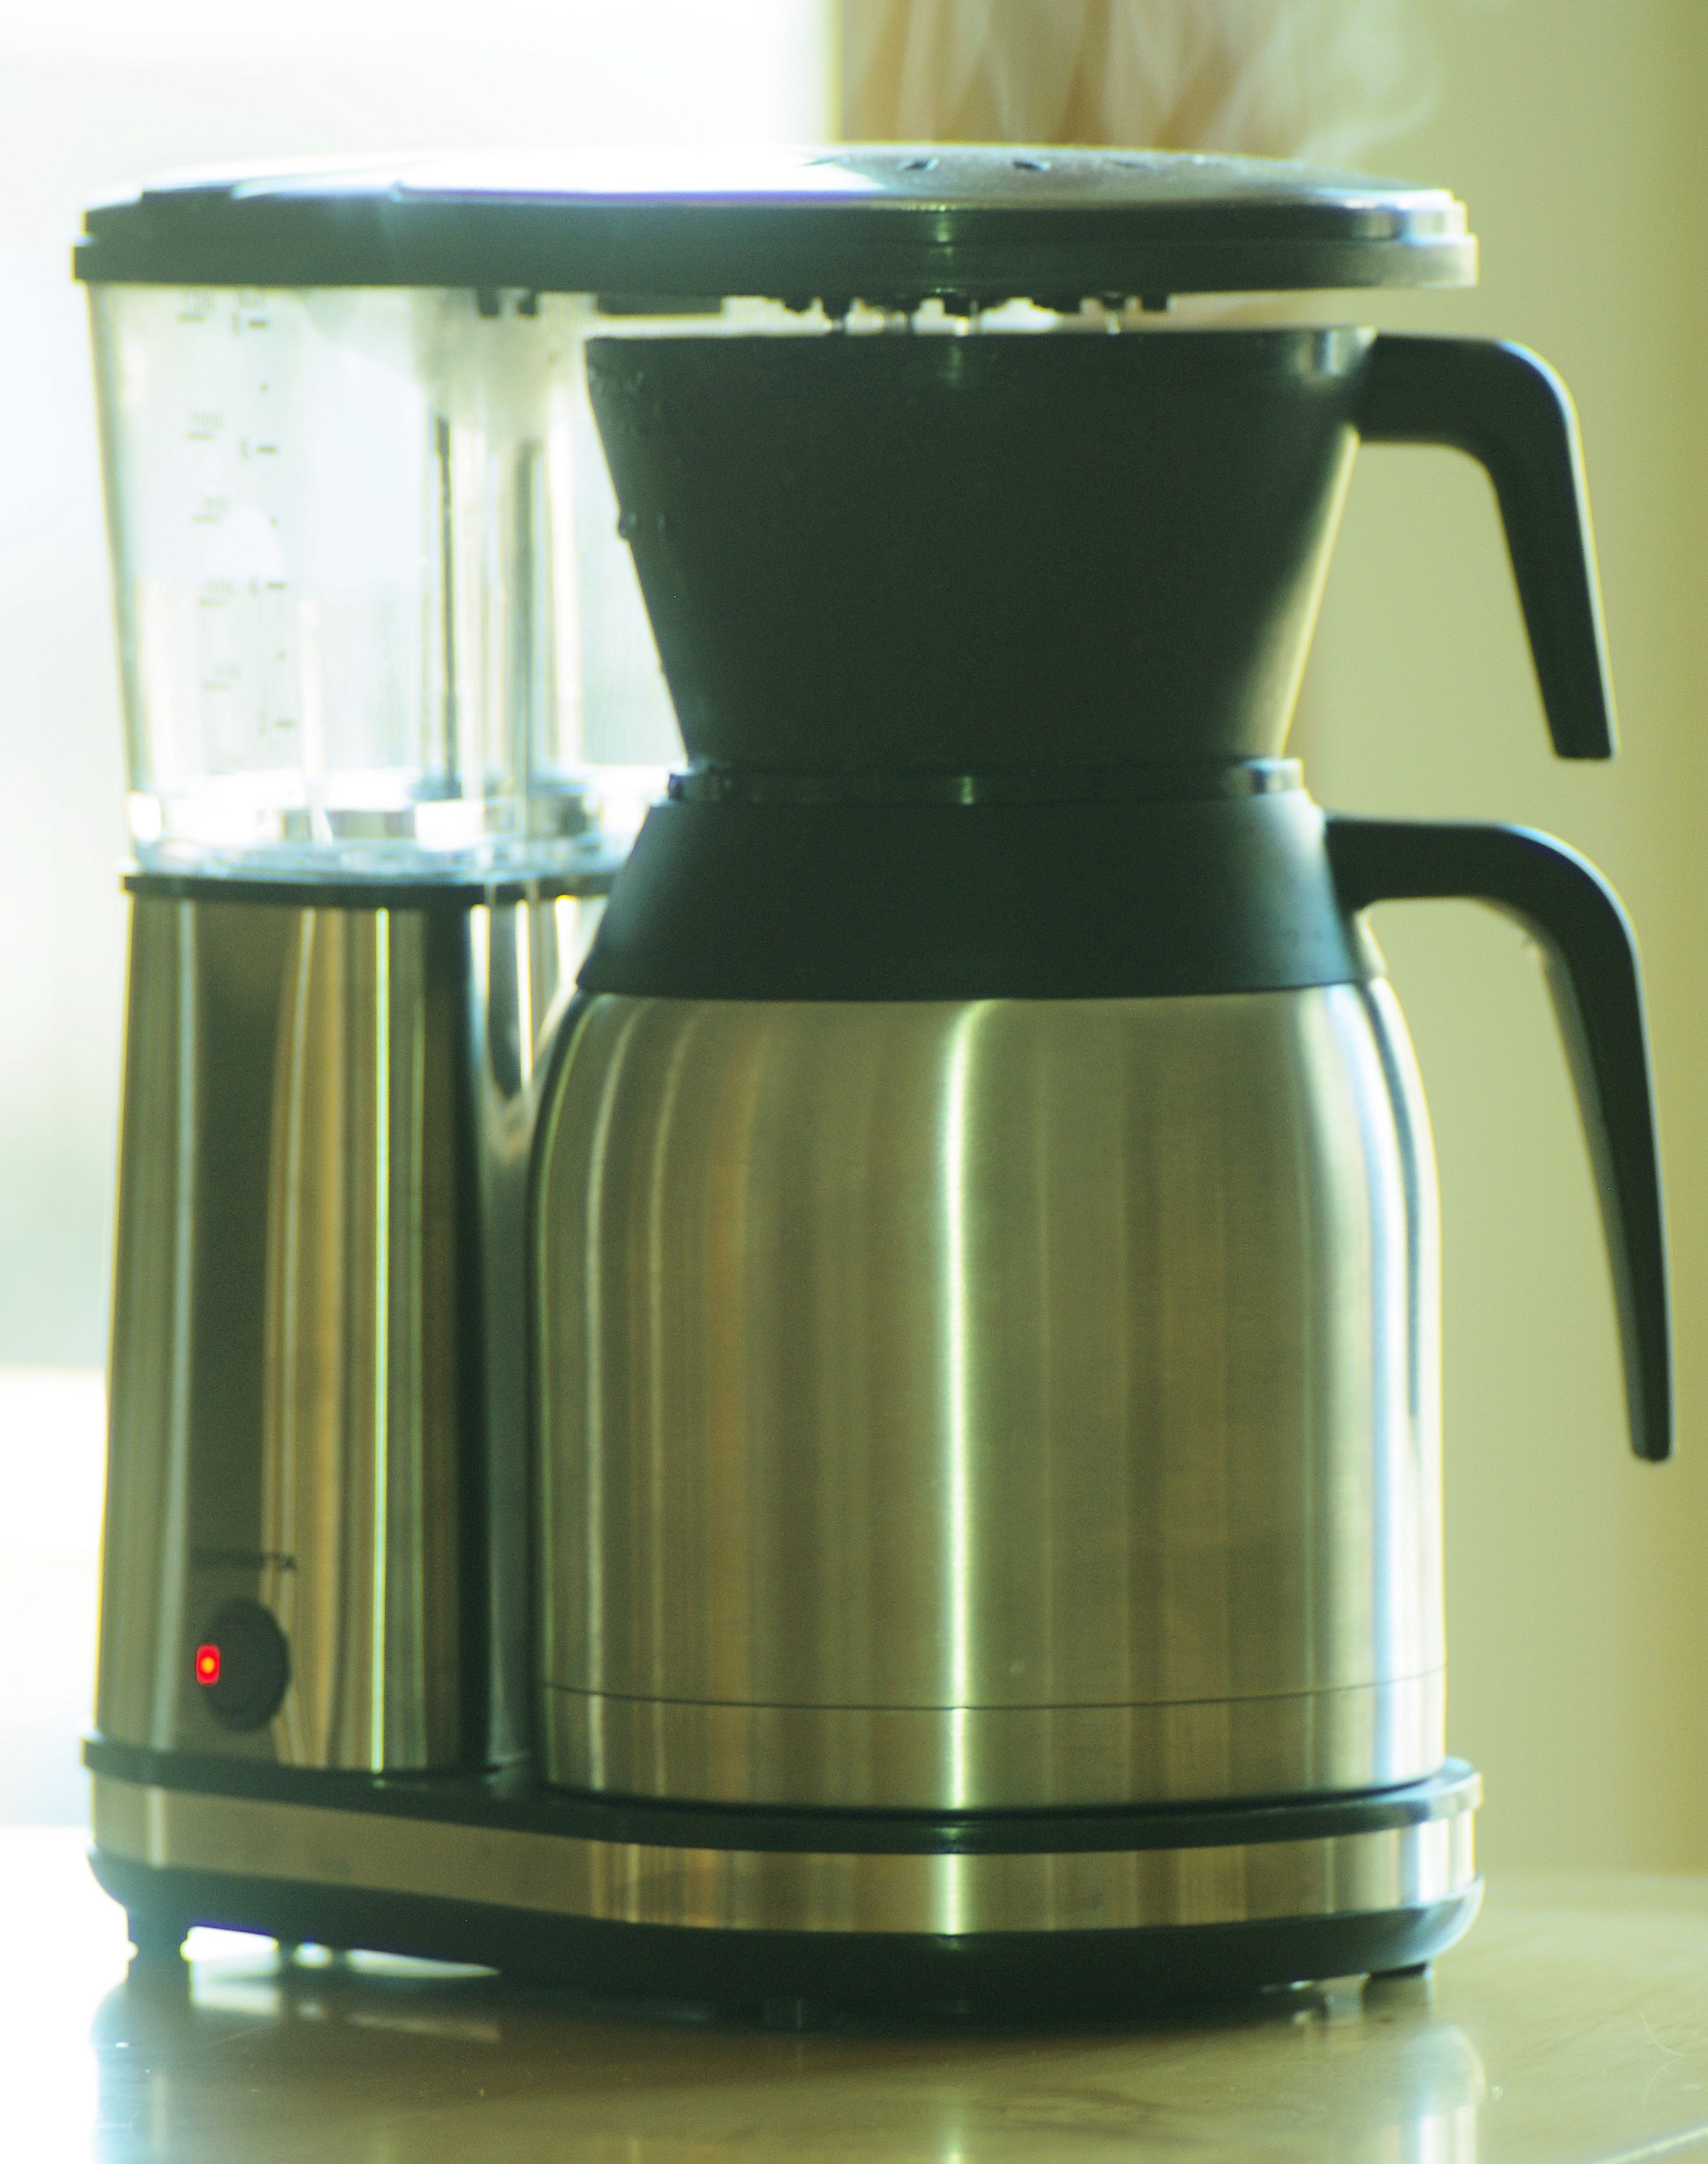 Bonavita 8-Cup Coffee Brewer Review